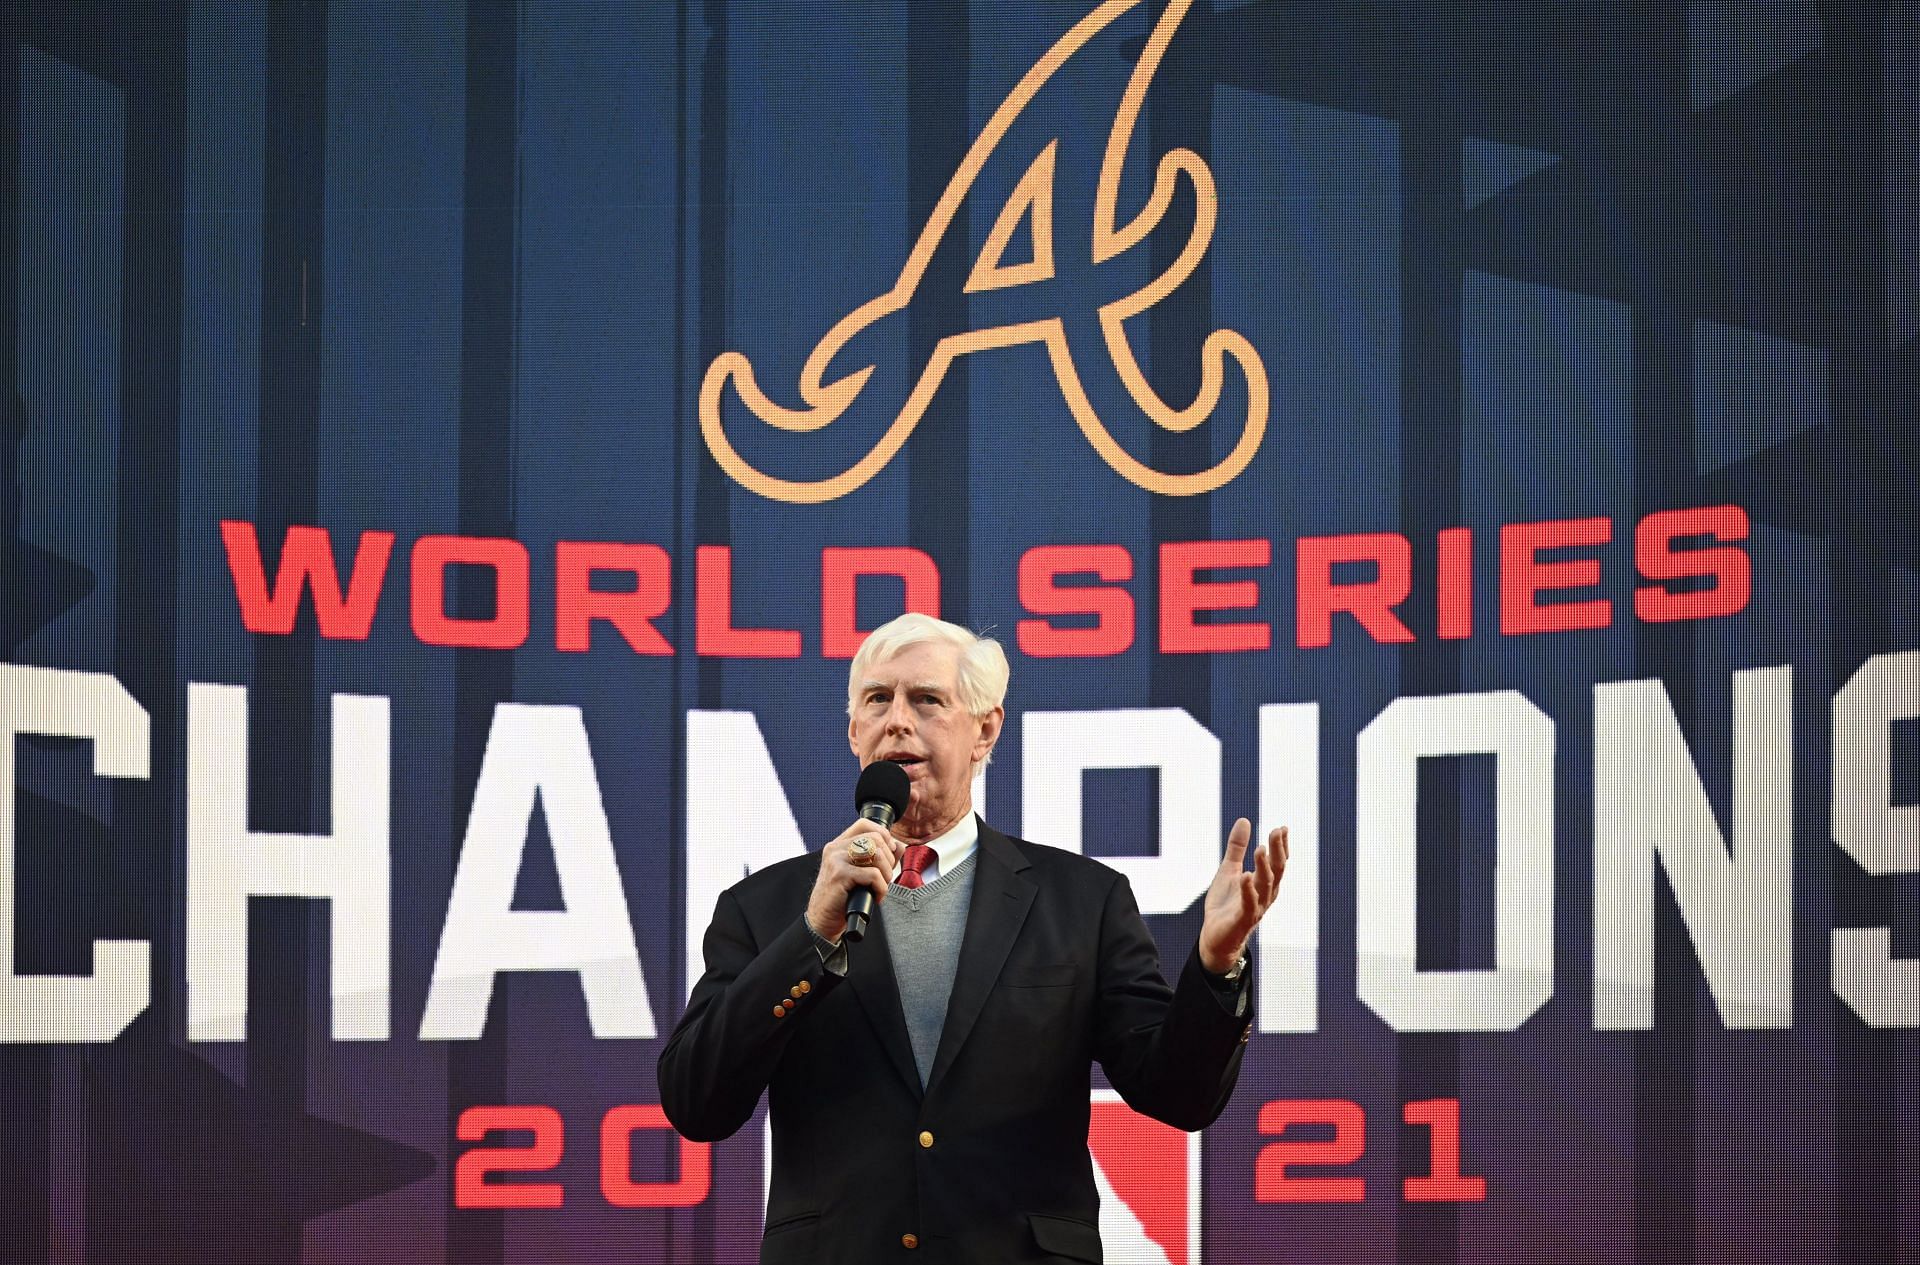 Atlanta Braves won the World Series title in a dramatuc 2021 season.